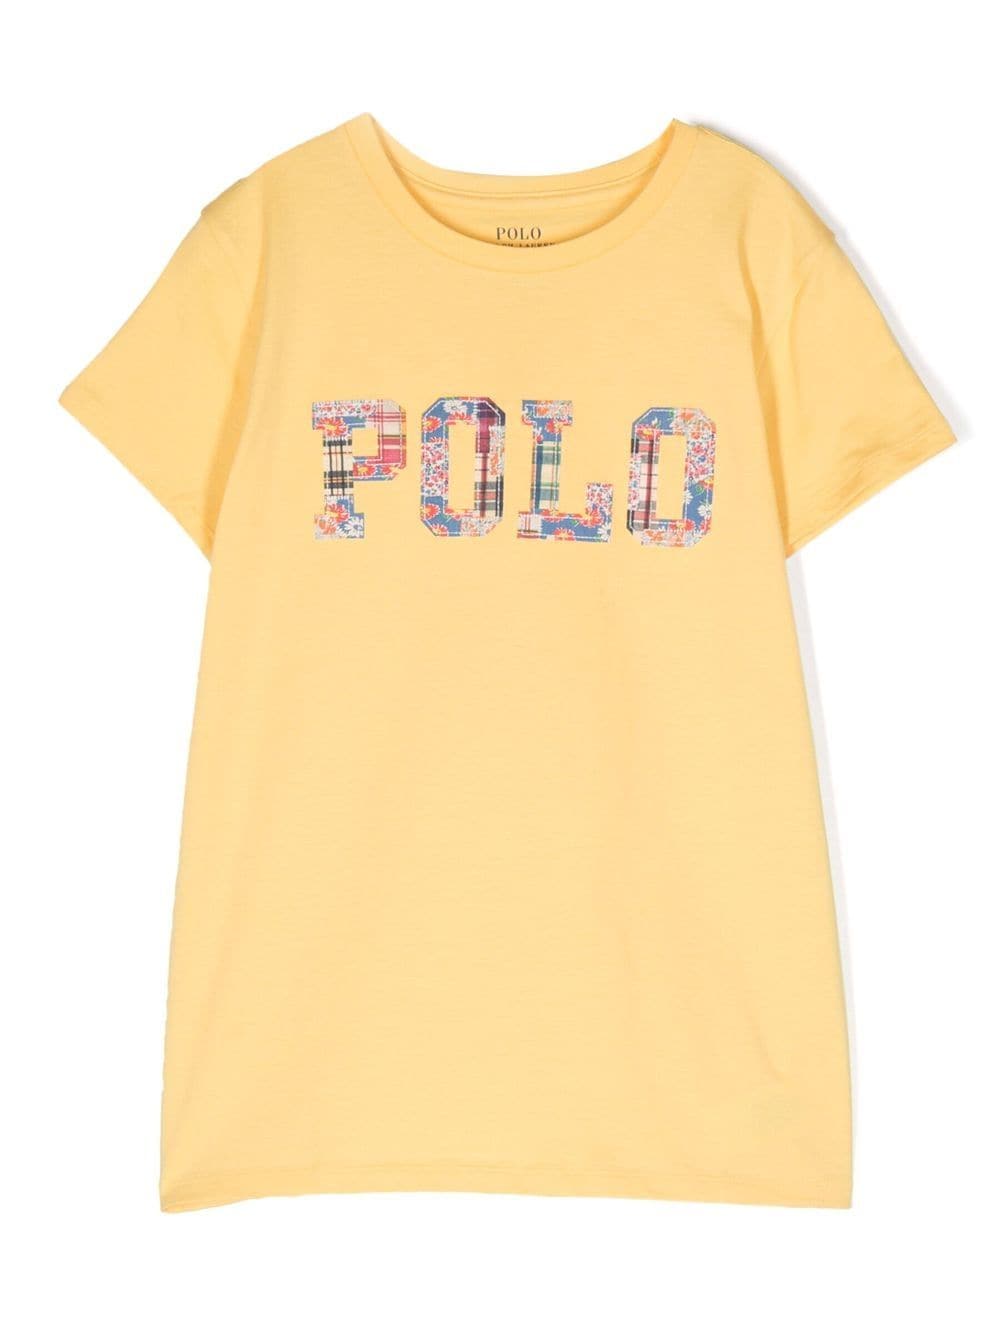 Ralph Lauren Kids Polo cotton T-shirt - Yellow von Ralph Lauren Kids